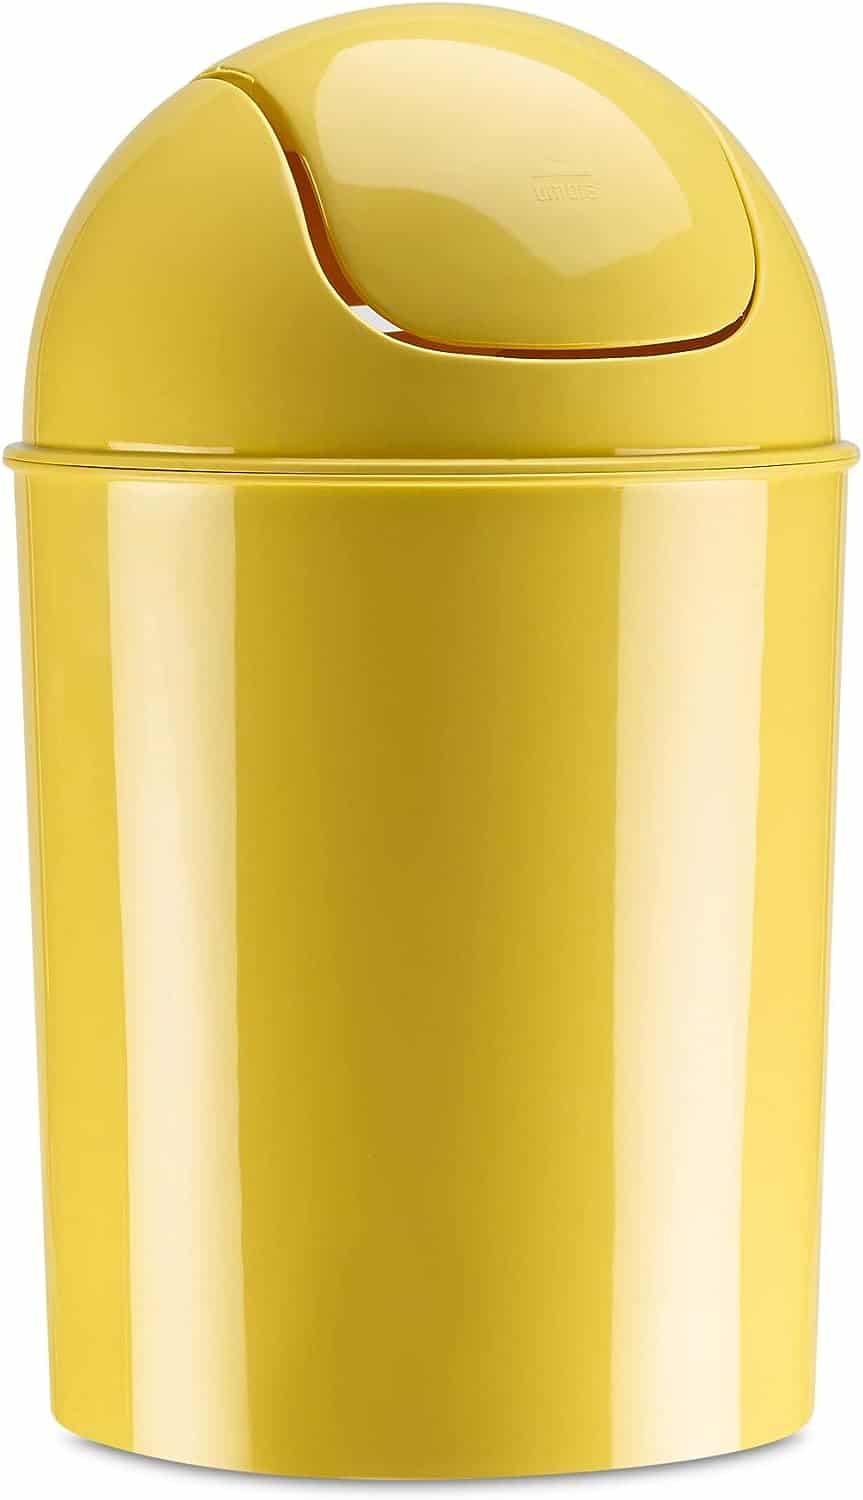 yellow trash can